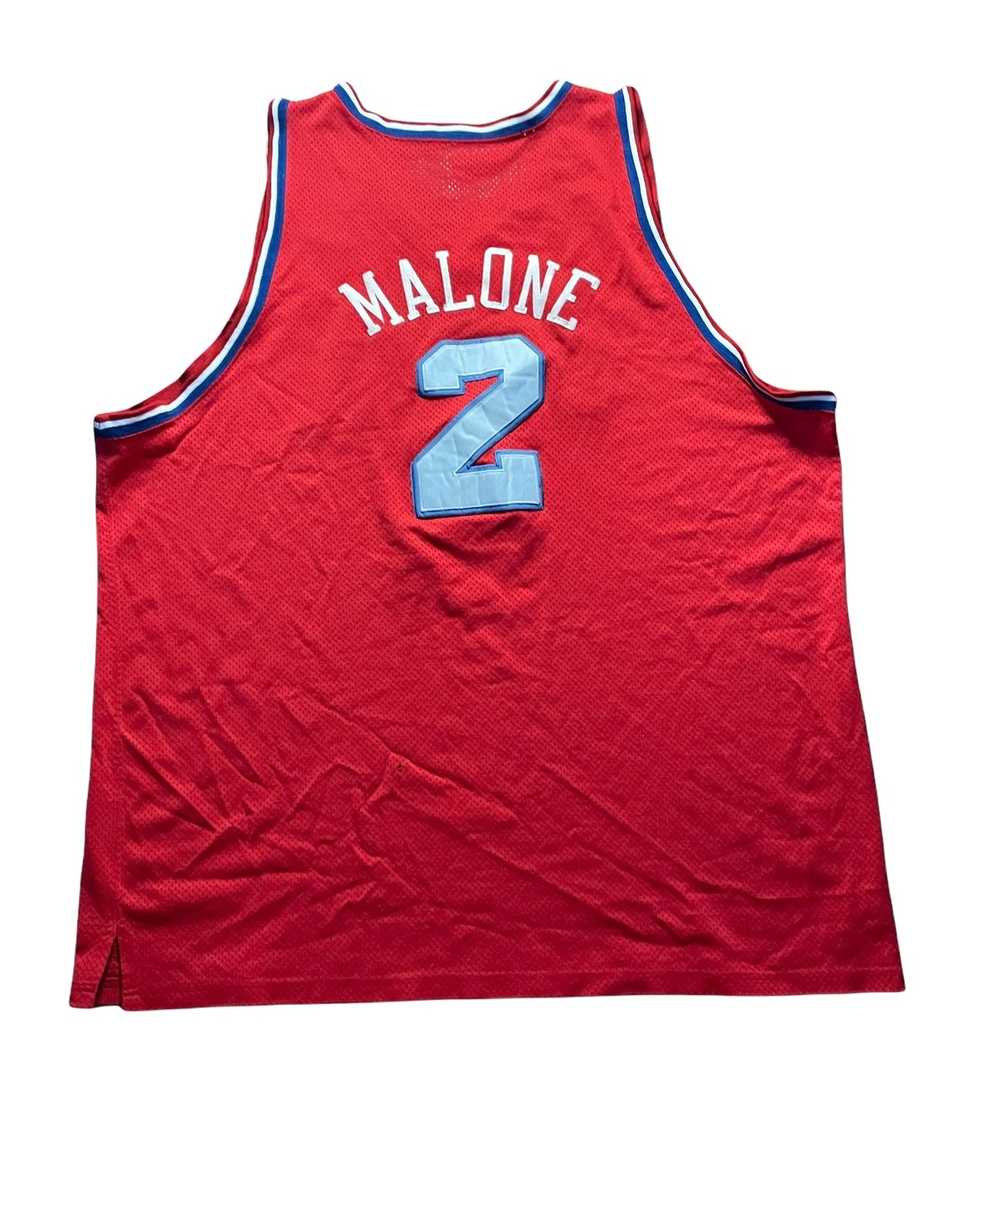 NBA Vintage Moses Malone Jersey - image 2